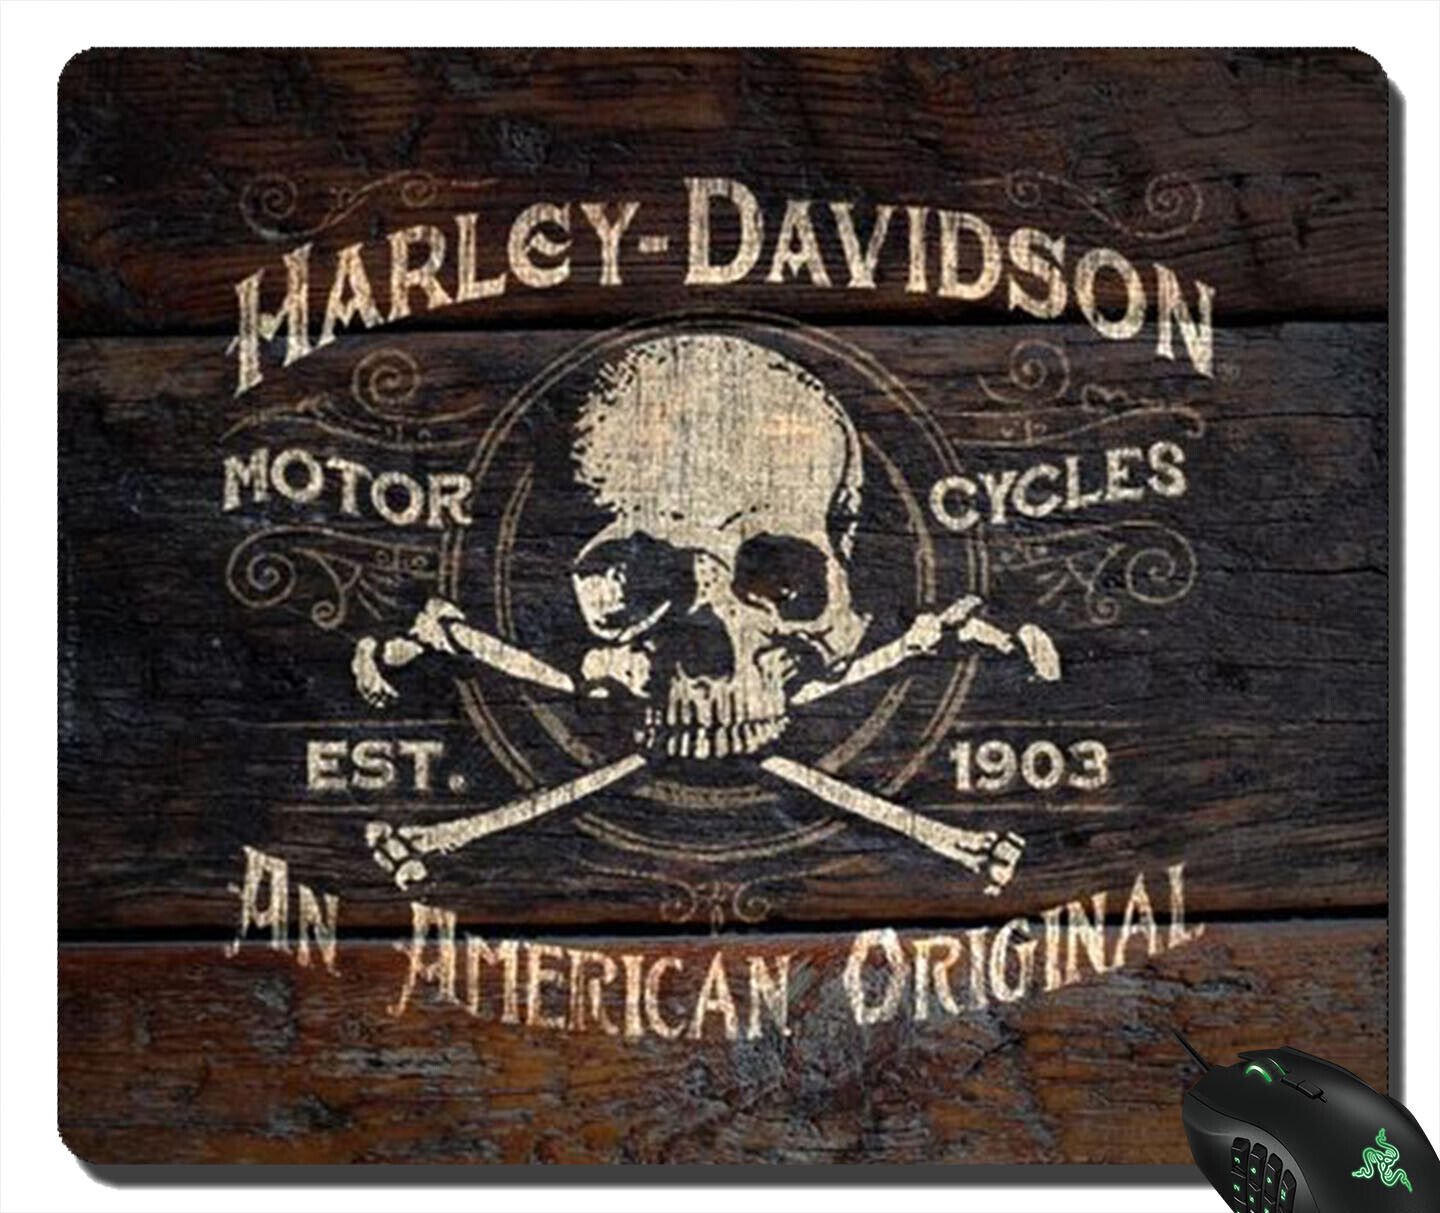 NEW Retro Harley Davidson motor cycles an american original mousepad mouse